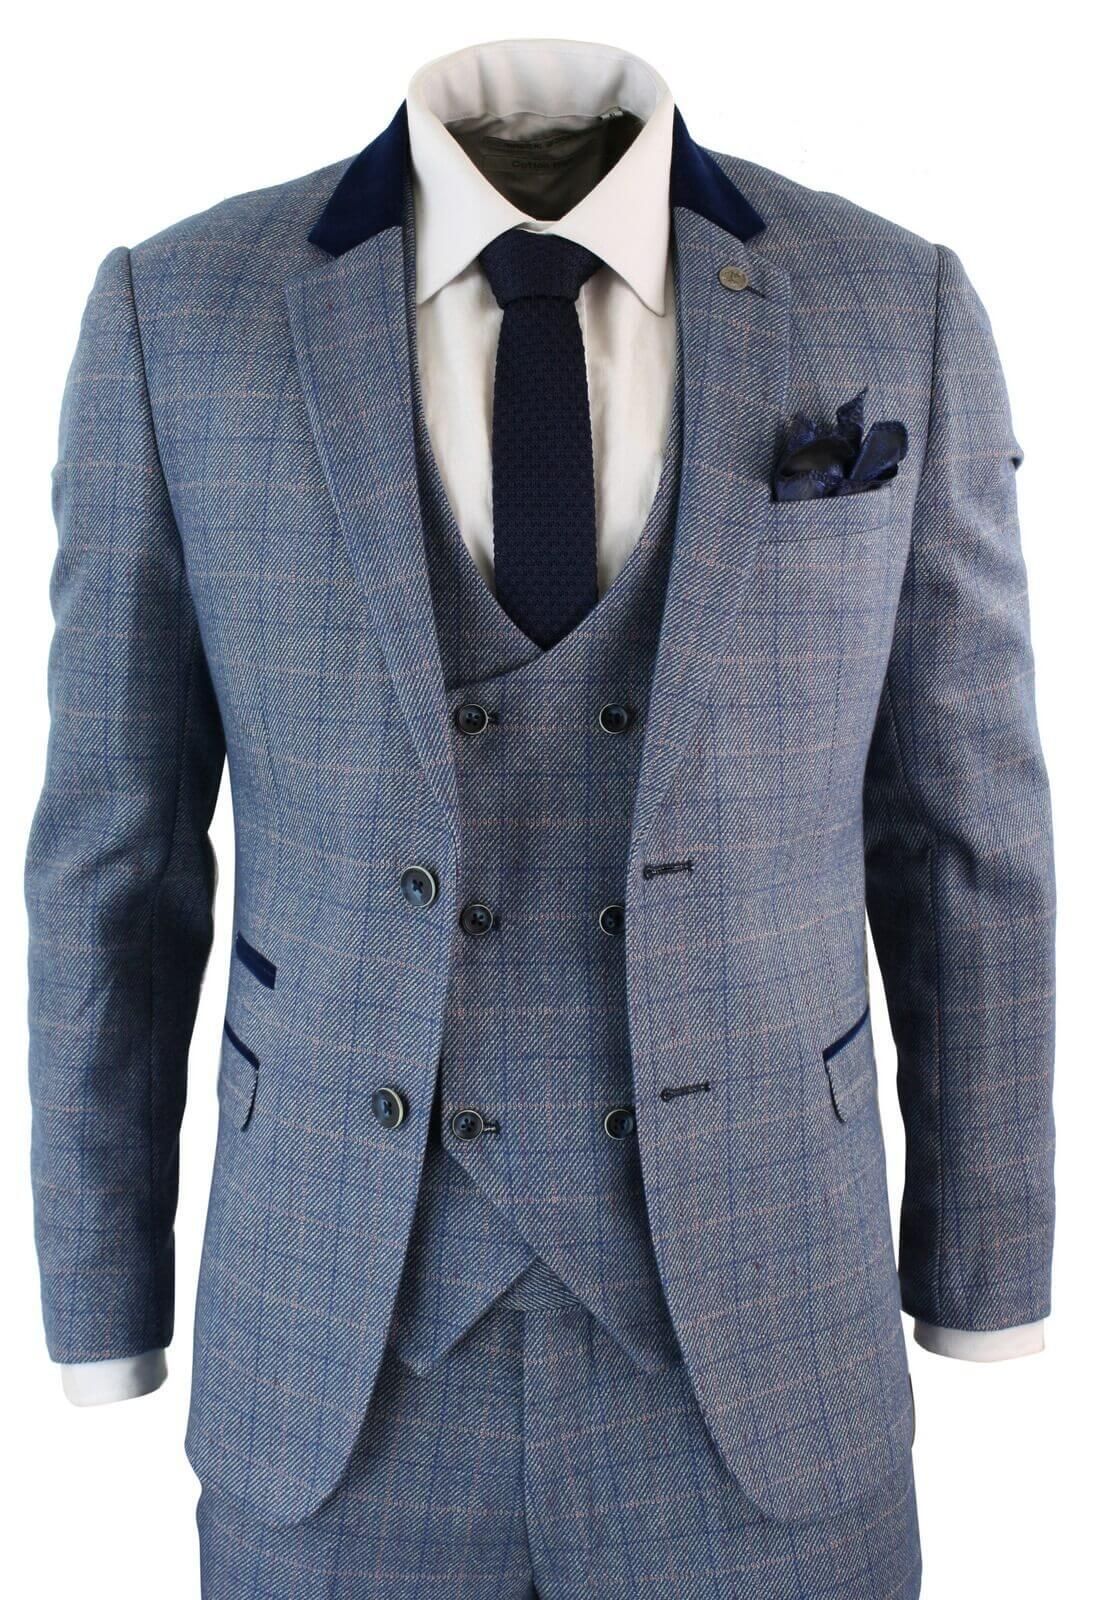 Wemaliyzd Mens 3 Piece Jacquard Wedding Suit Paisley Pattern Blazer Vest Pants 